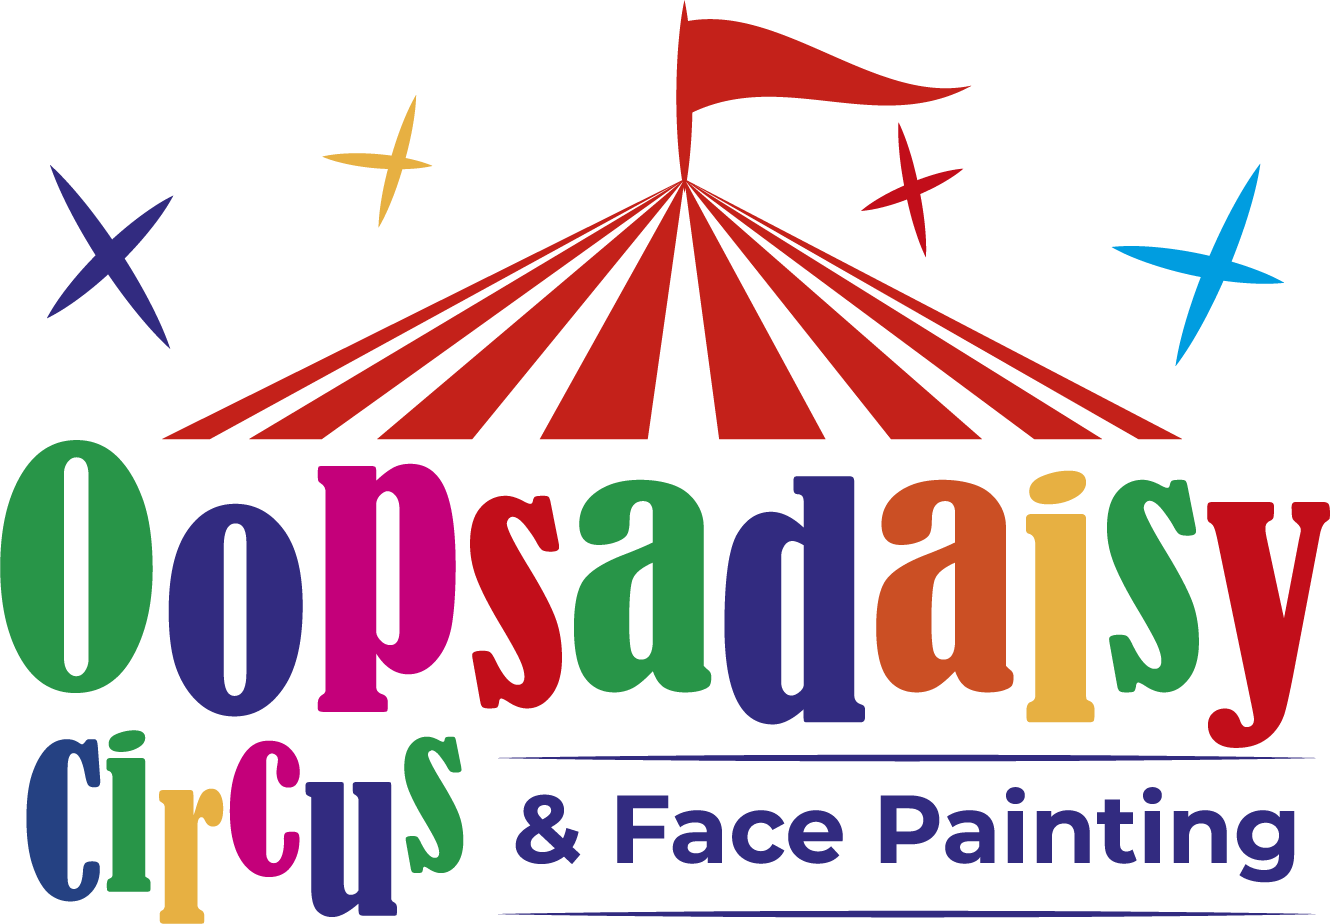 Oopsadaisy Circus & Face Painting